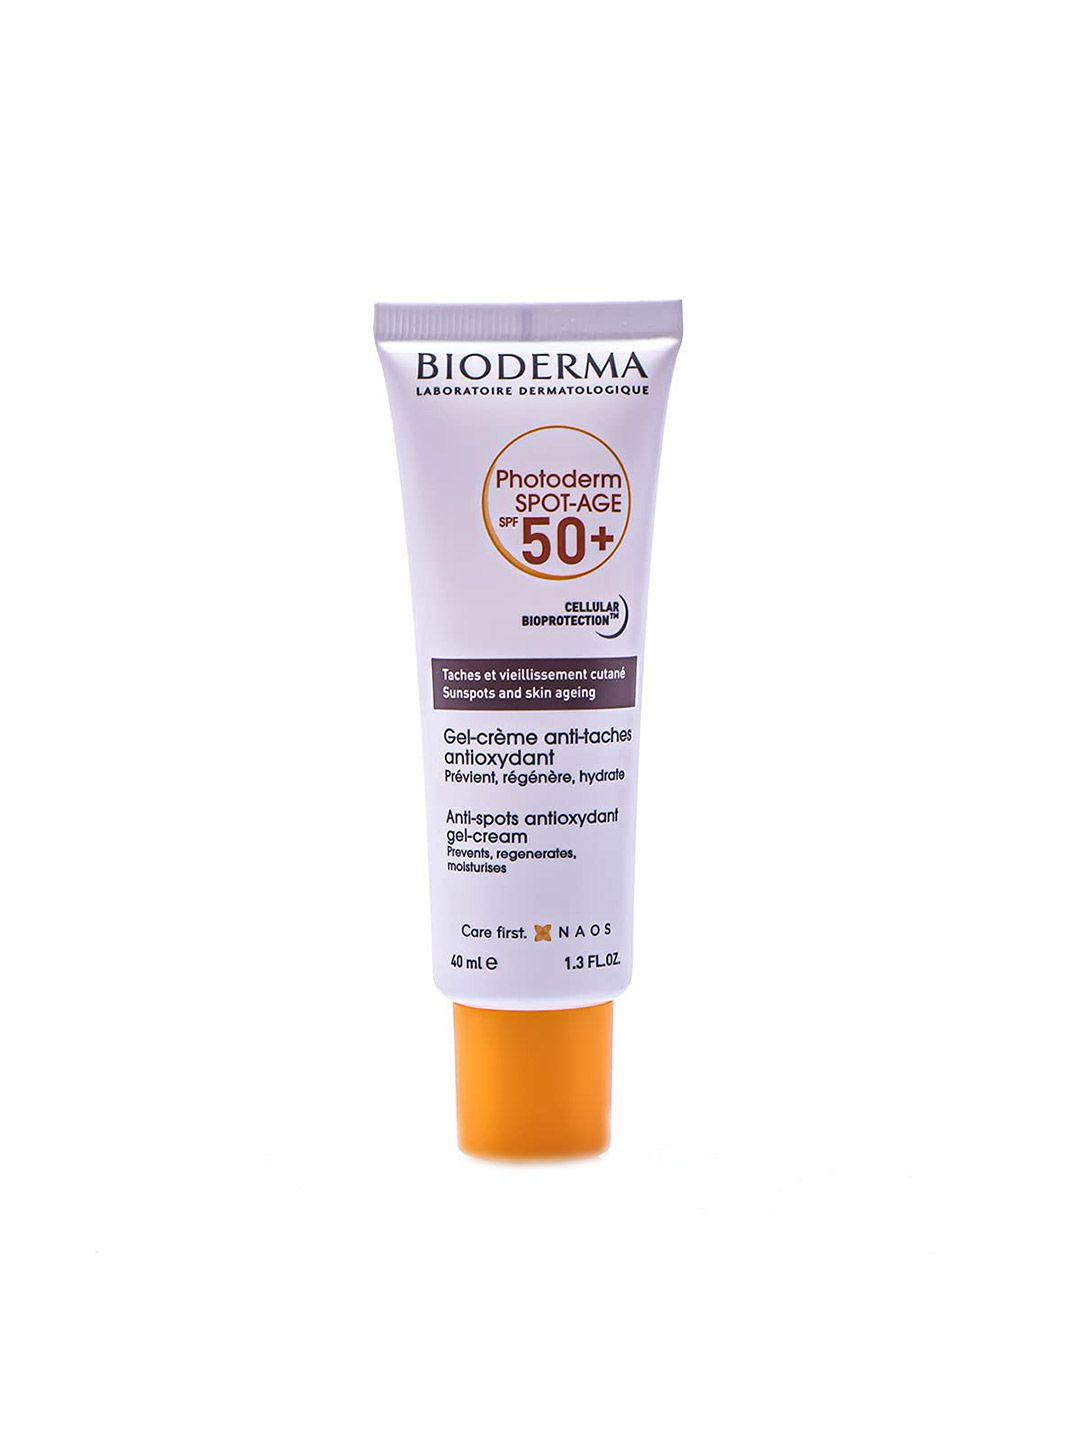 bioderma photoderm spot age spf 50+ anti-oxidant boosted sunscreen - 40ml